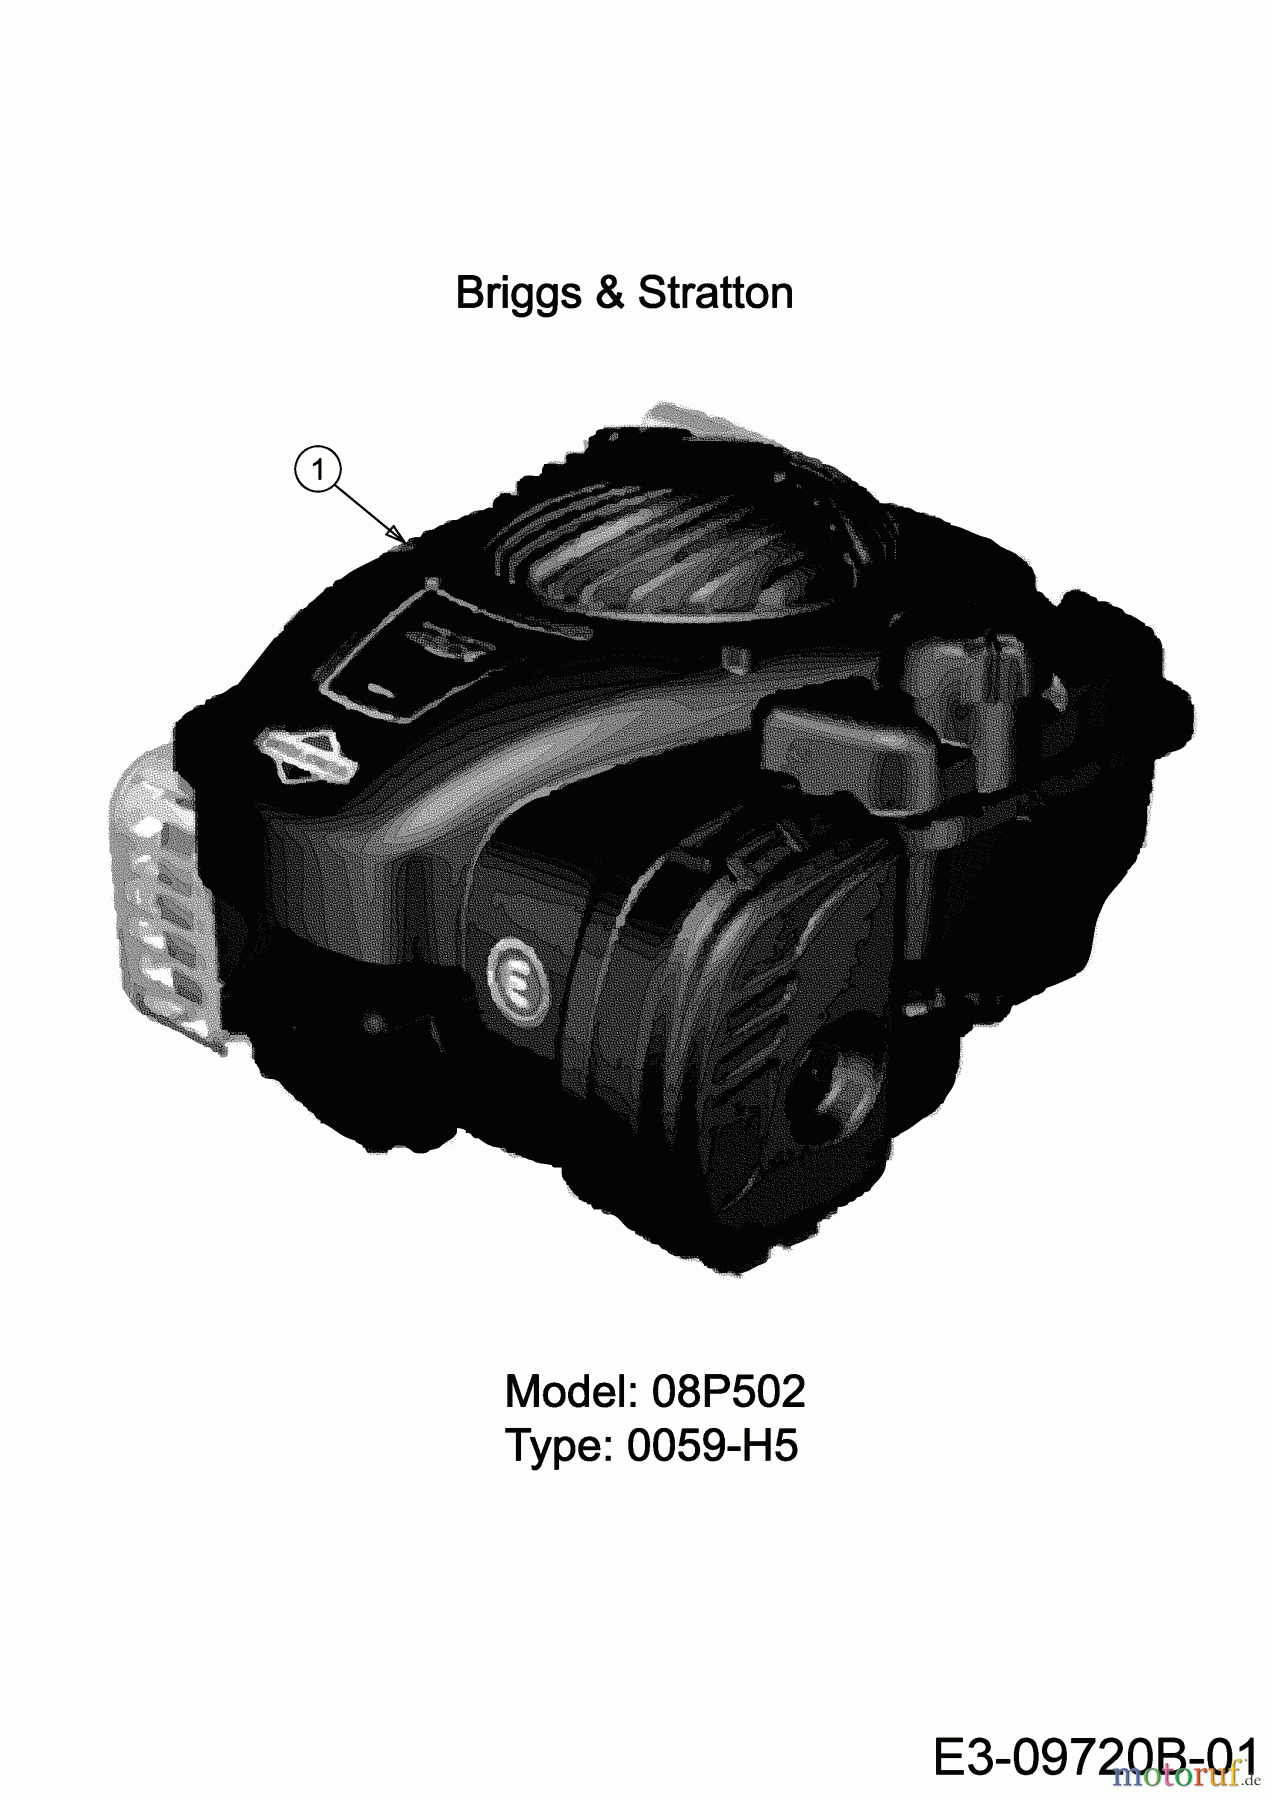  MTD Petrol mower 51 BC 11E-025J600 (2020) Engine Briggs & Stratton